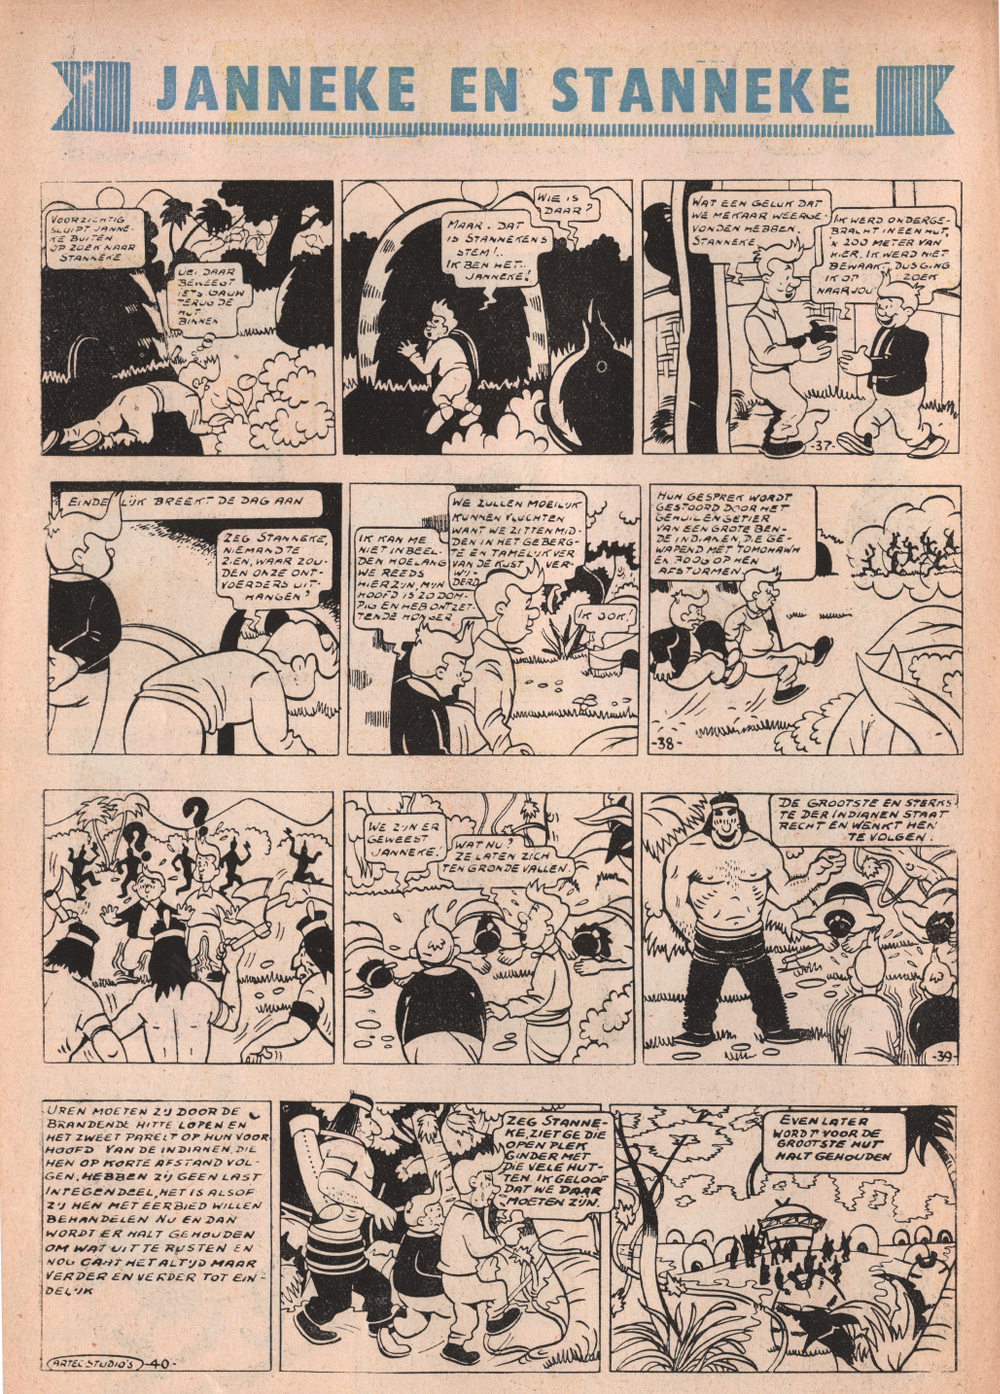 Janneke en Stanneke, a 1948 series by Bob De Moor never published in album format (except for one story)